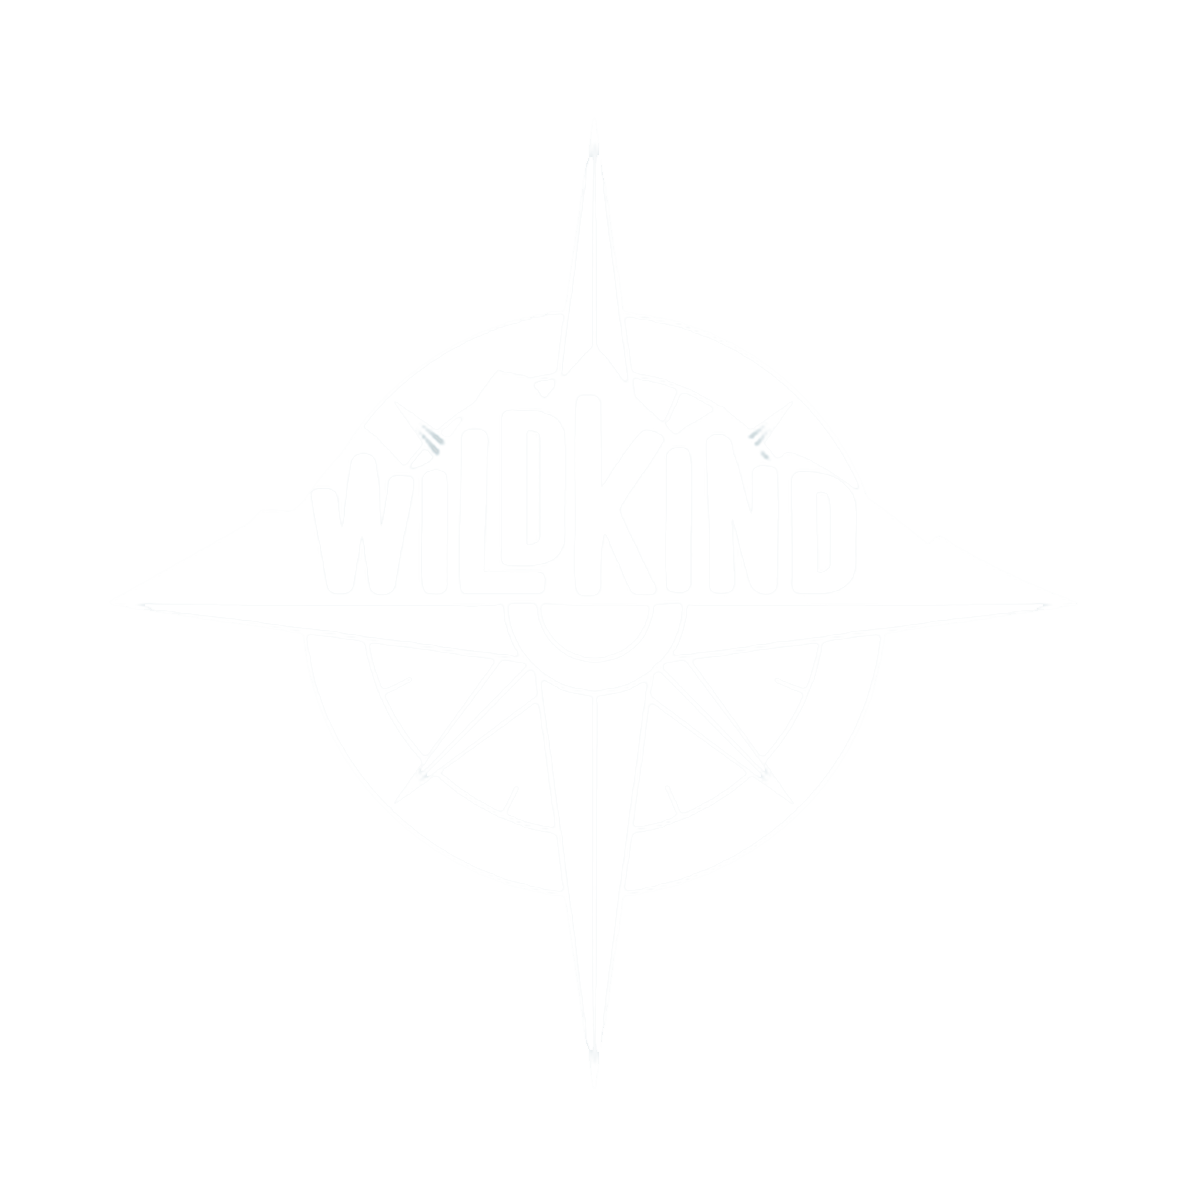 wildkind.png